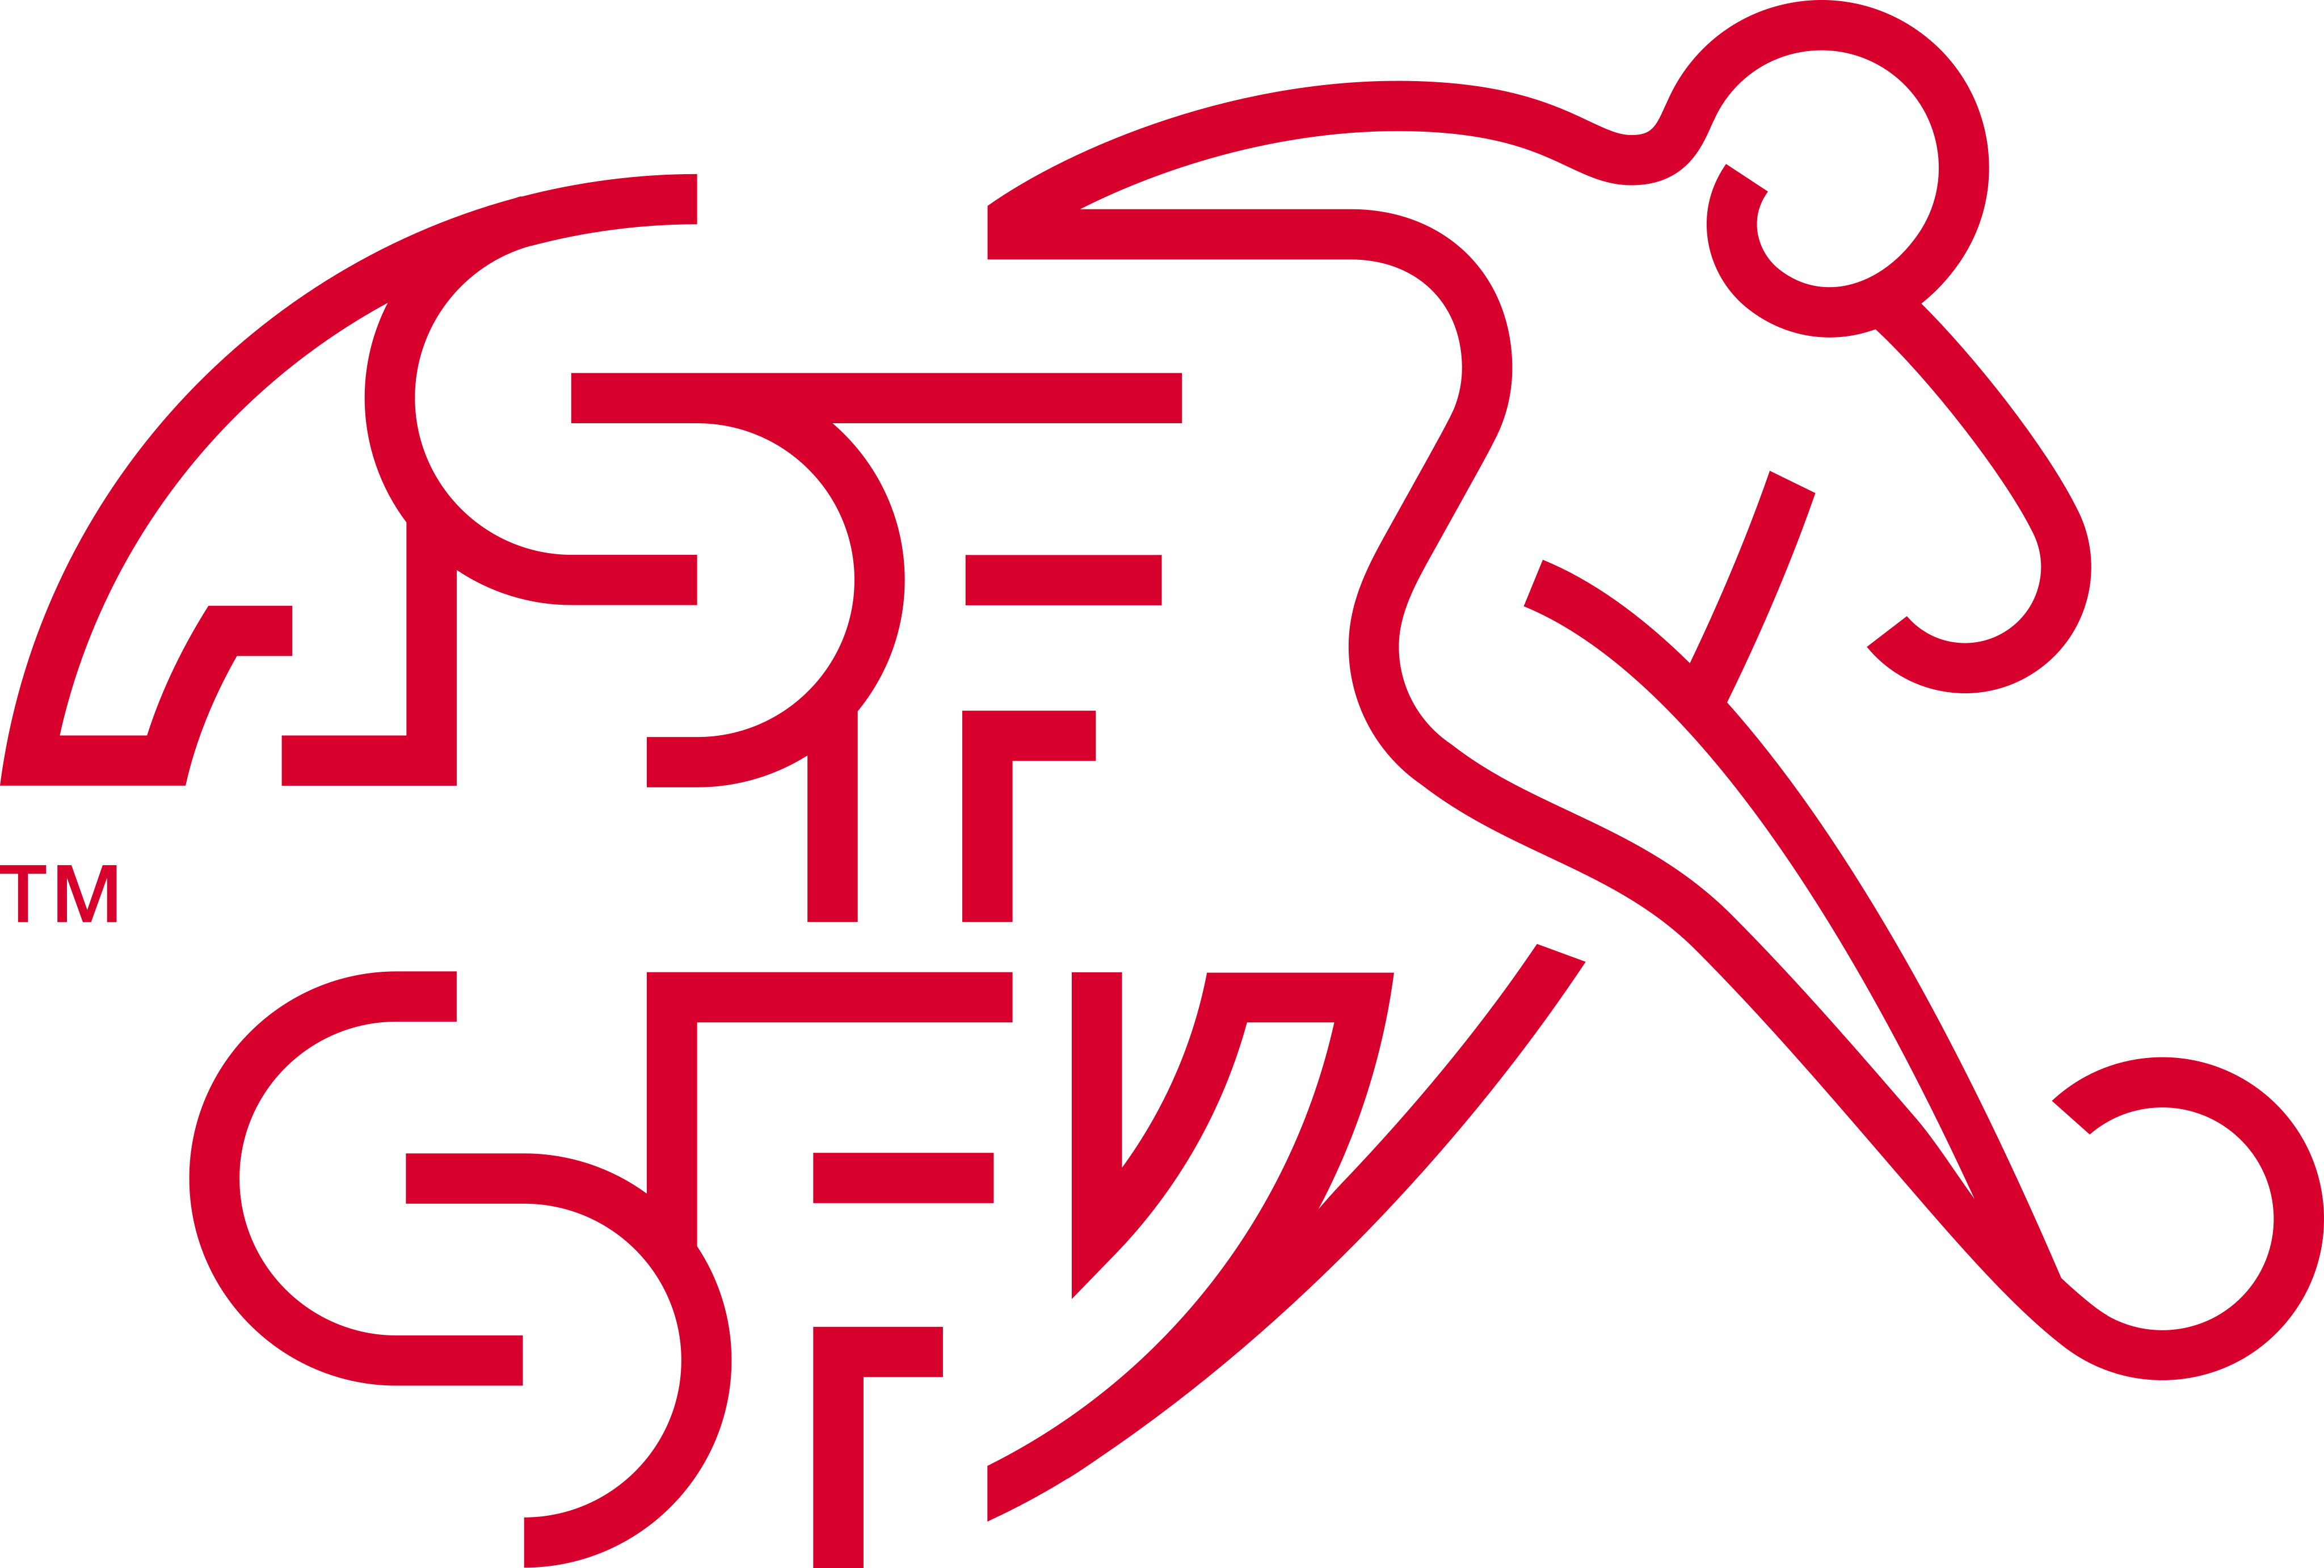 switzerland national football team logo - Switzerland National Football Team Logo